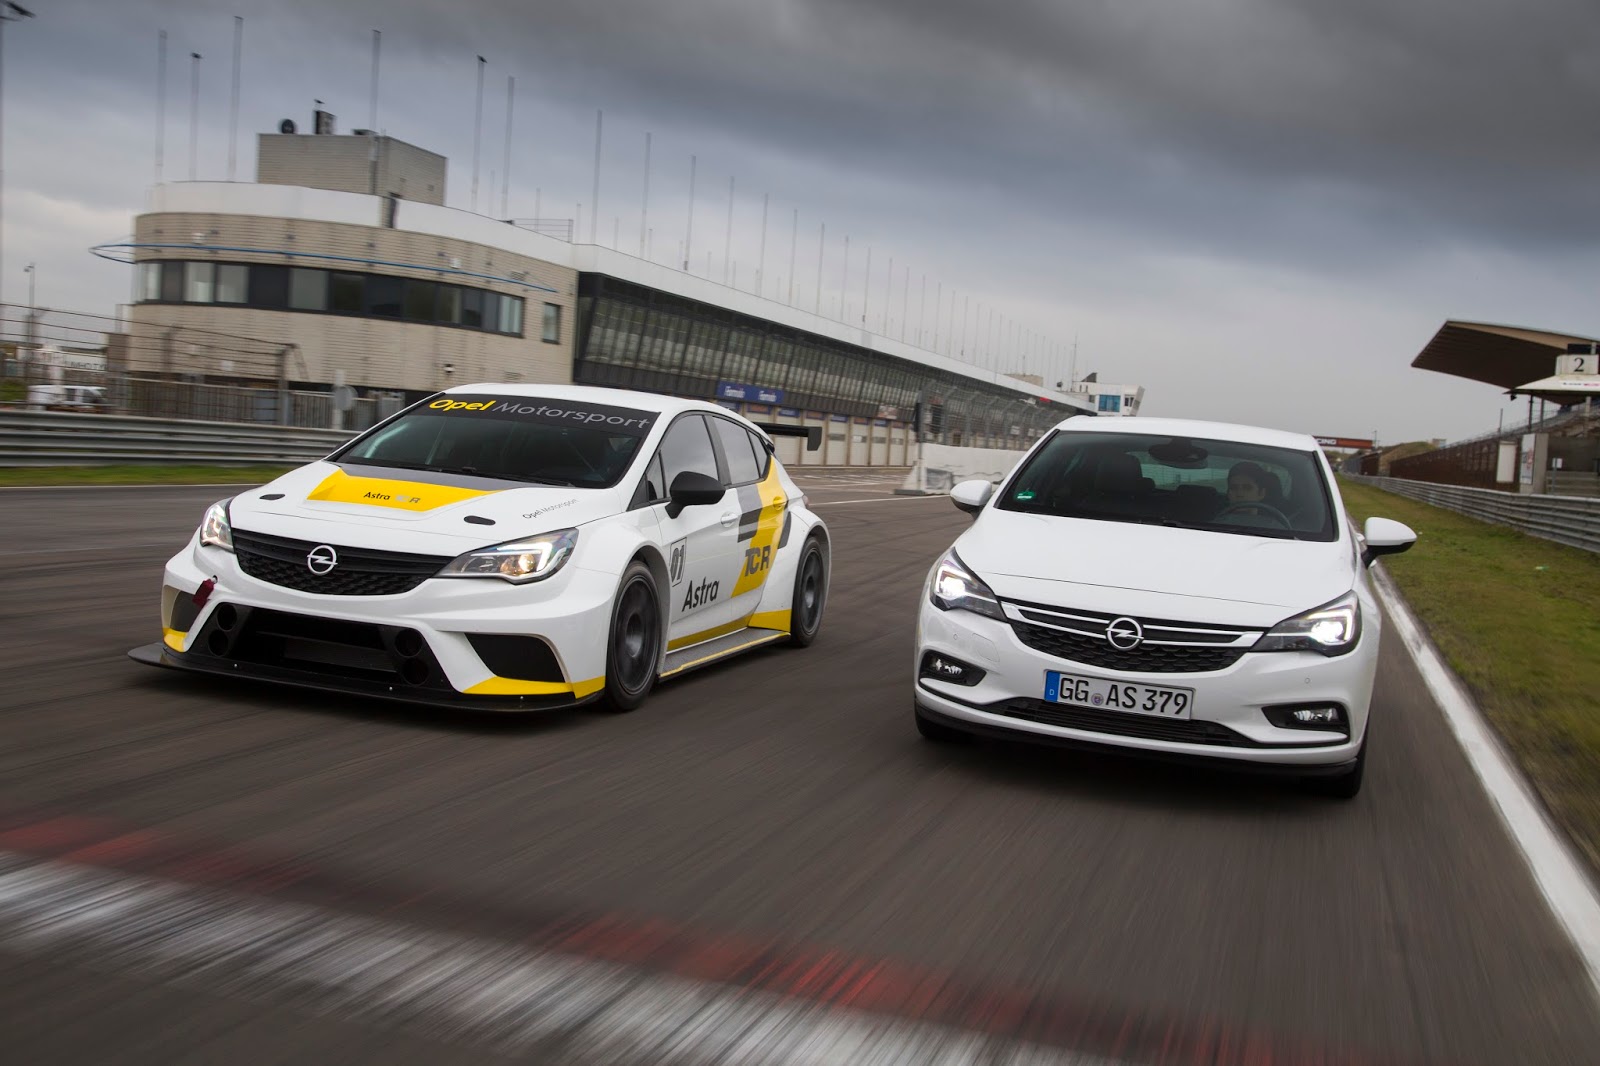 Opel Astra TCR 299189 To Opel Astra TCR του 2017, θα μπορεί να συμμετάσχει και σε αγώνες αντοχής